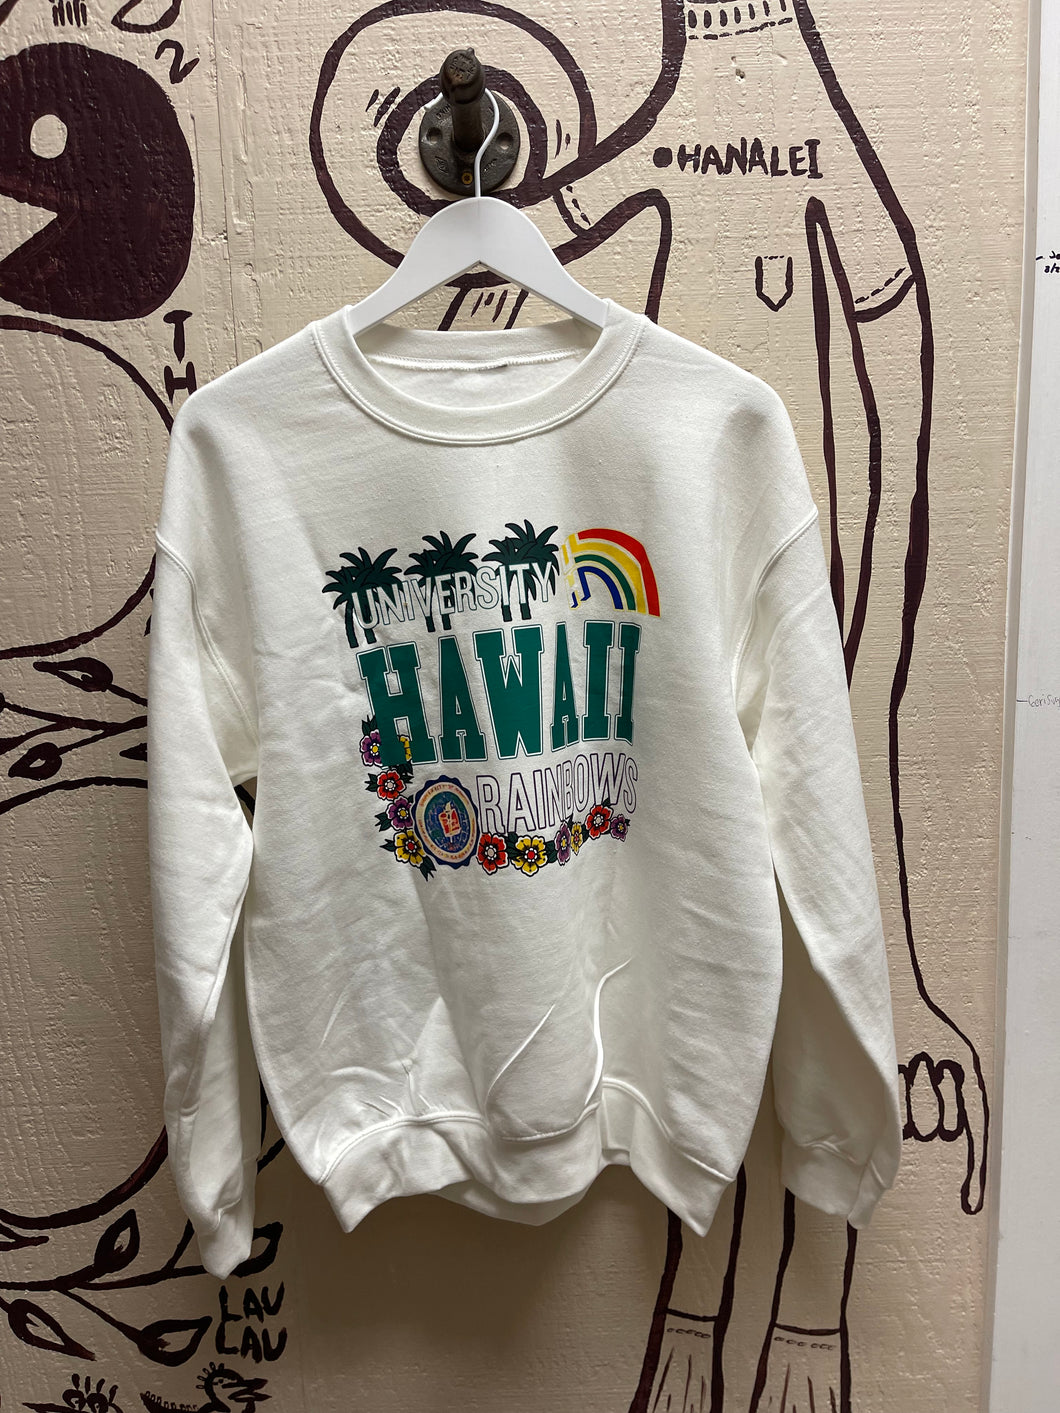 Ohanalei Vintage - “University Hawaii Rainbows” Sweatshirt